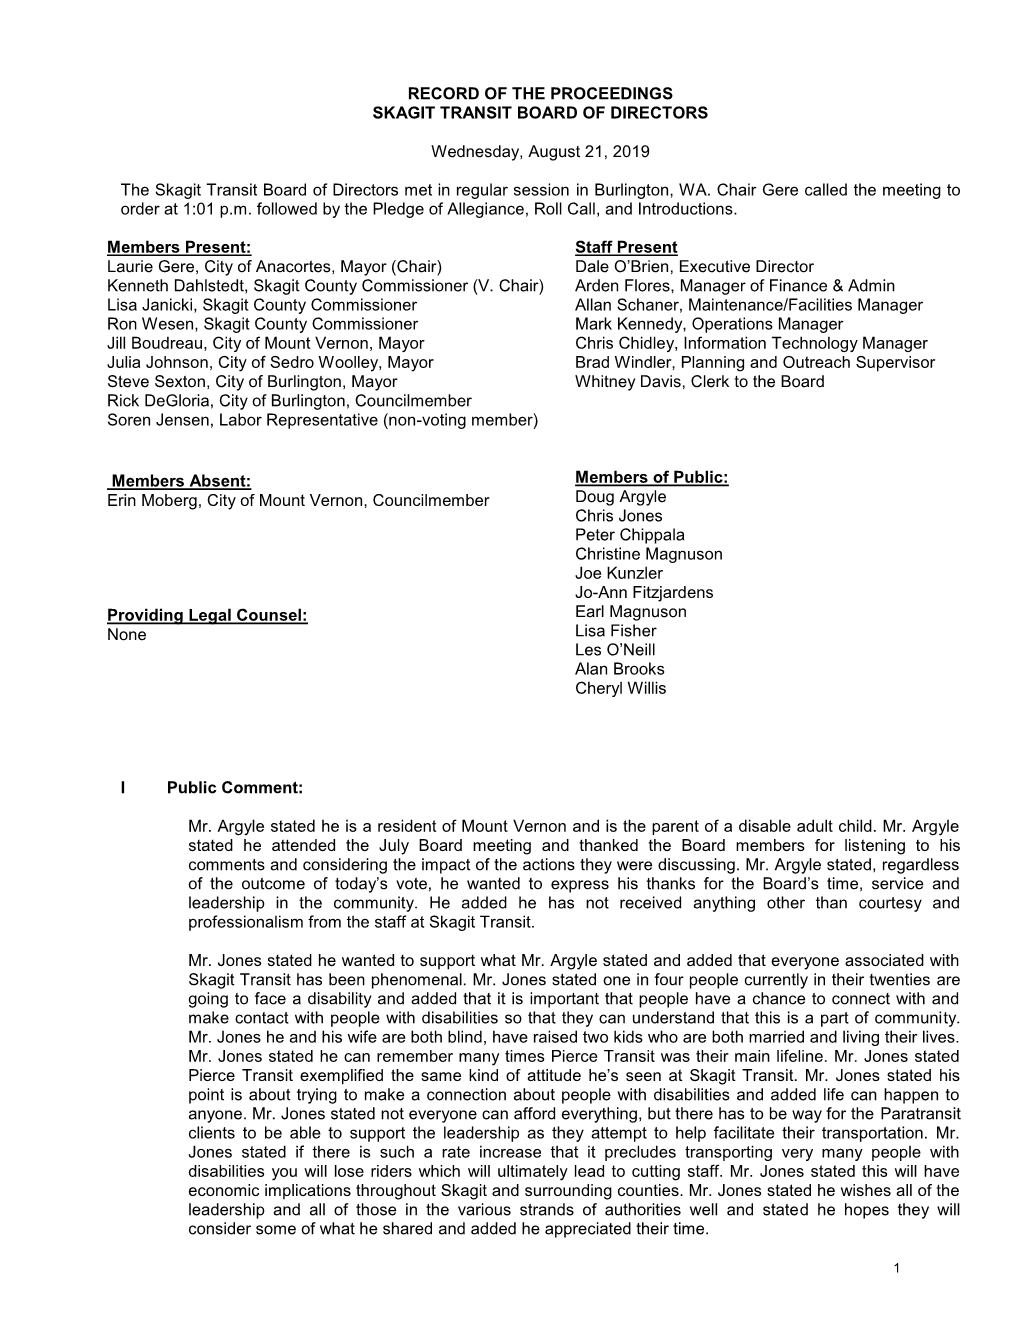 Record of the Proceedings Skagit Transit Board of Directors